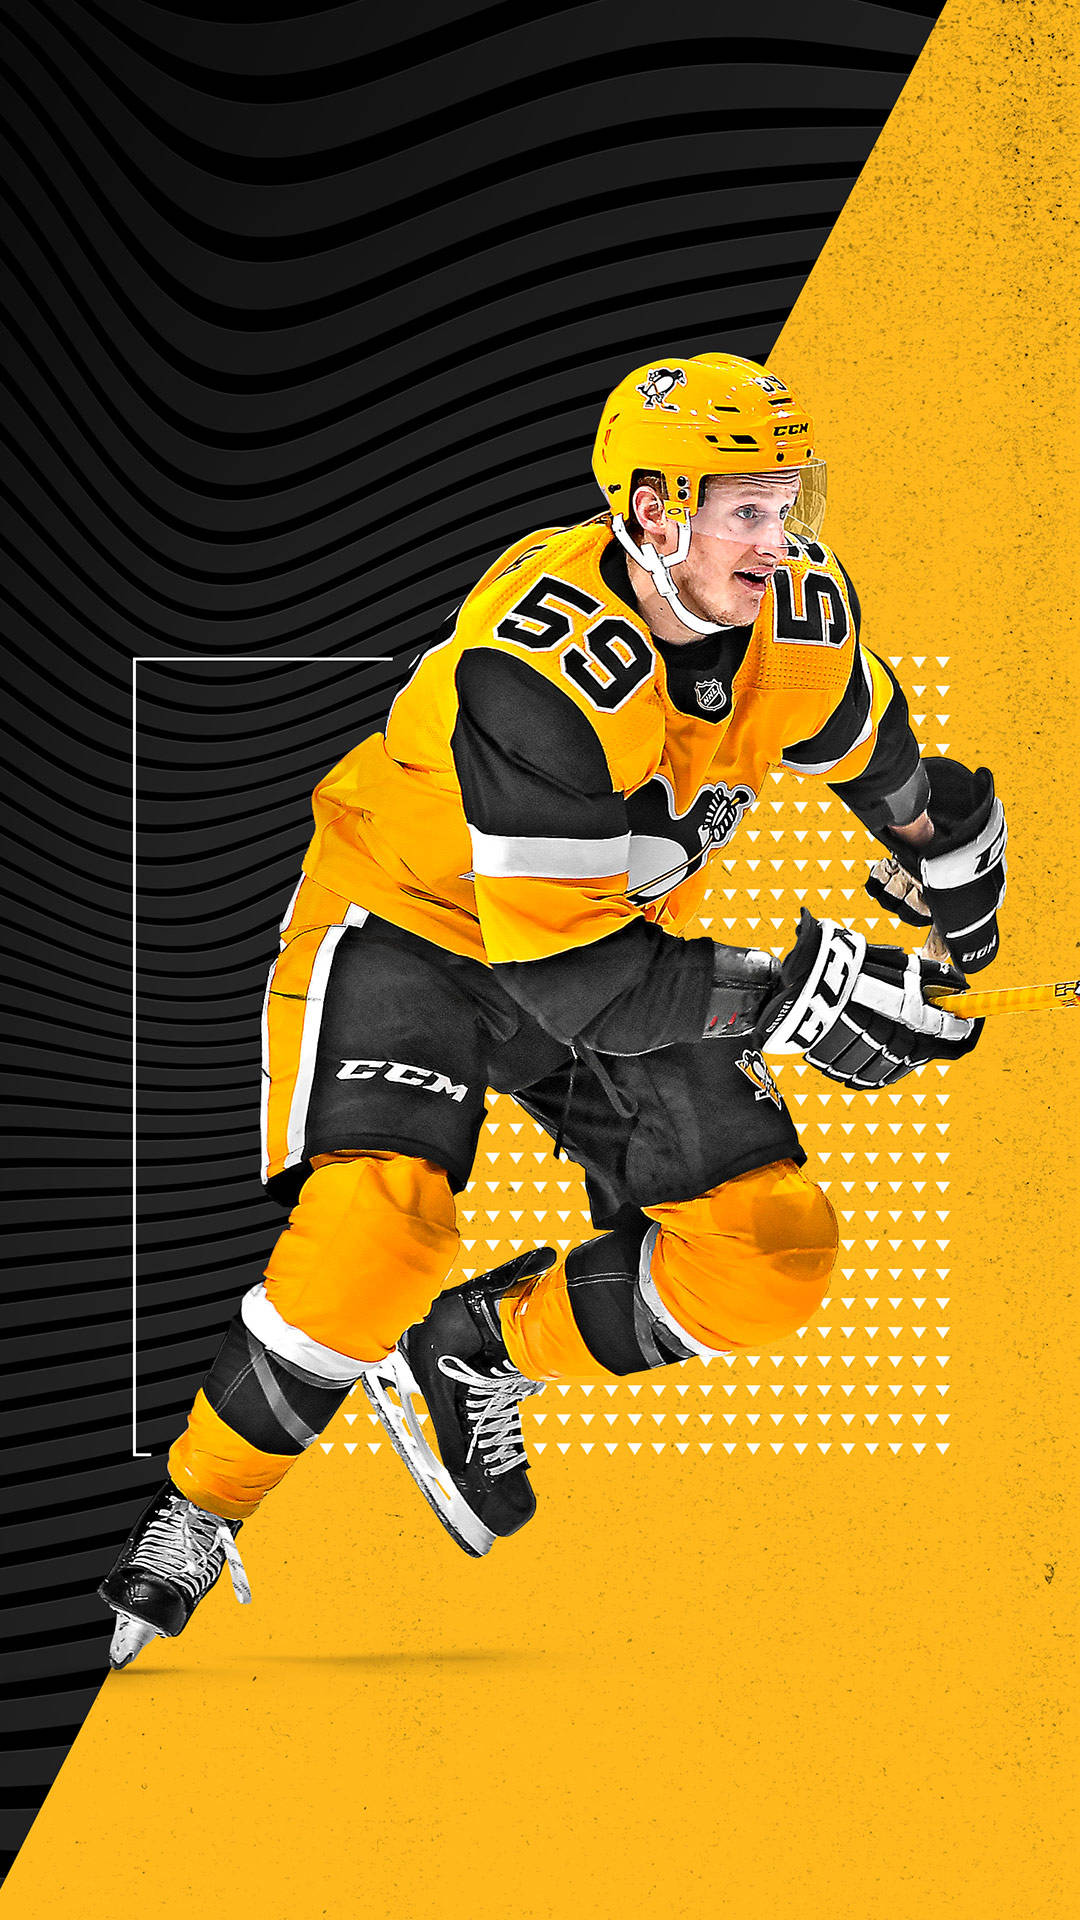 Pittsburgh Penguins Number 59 Wallpaper